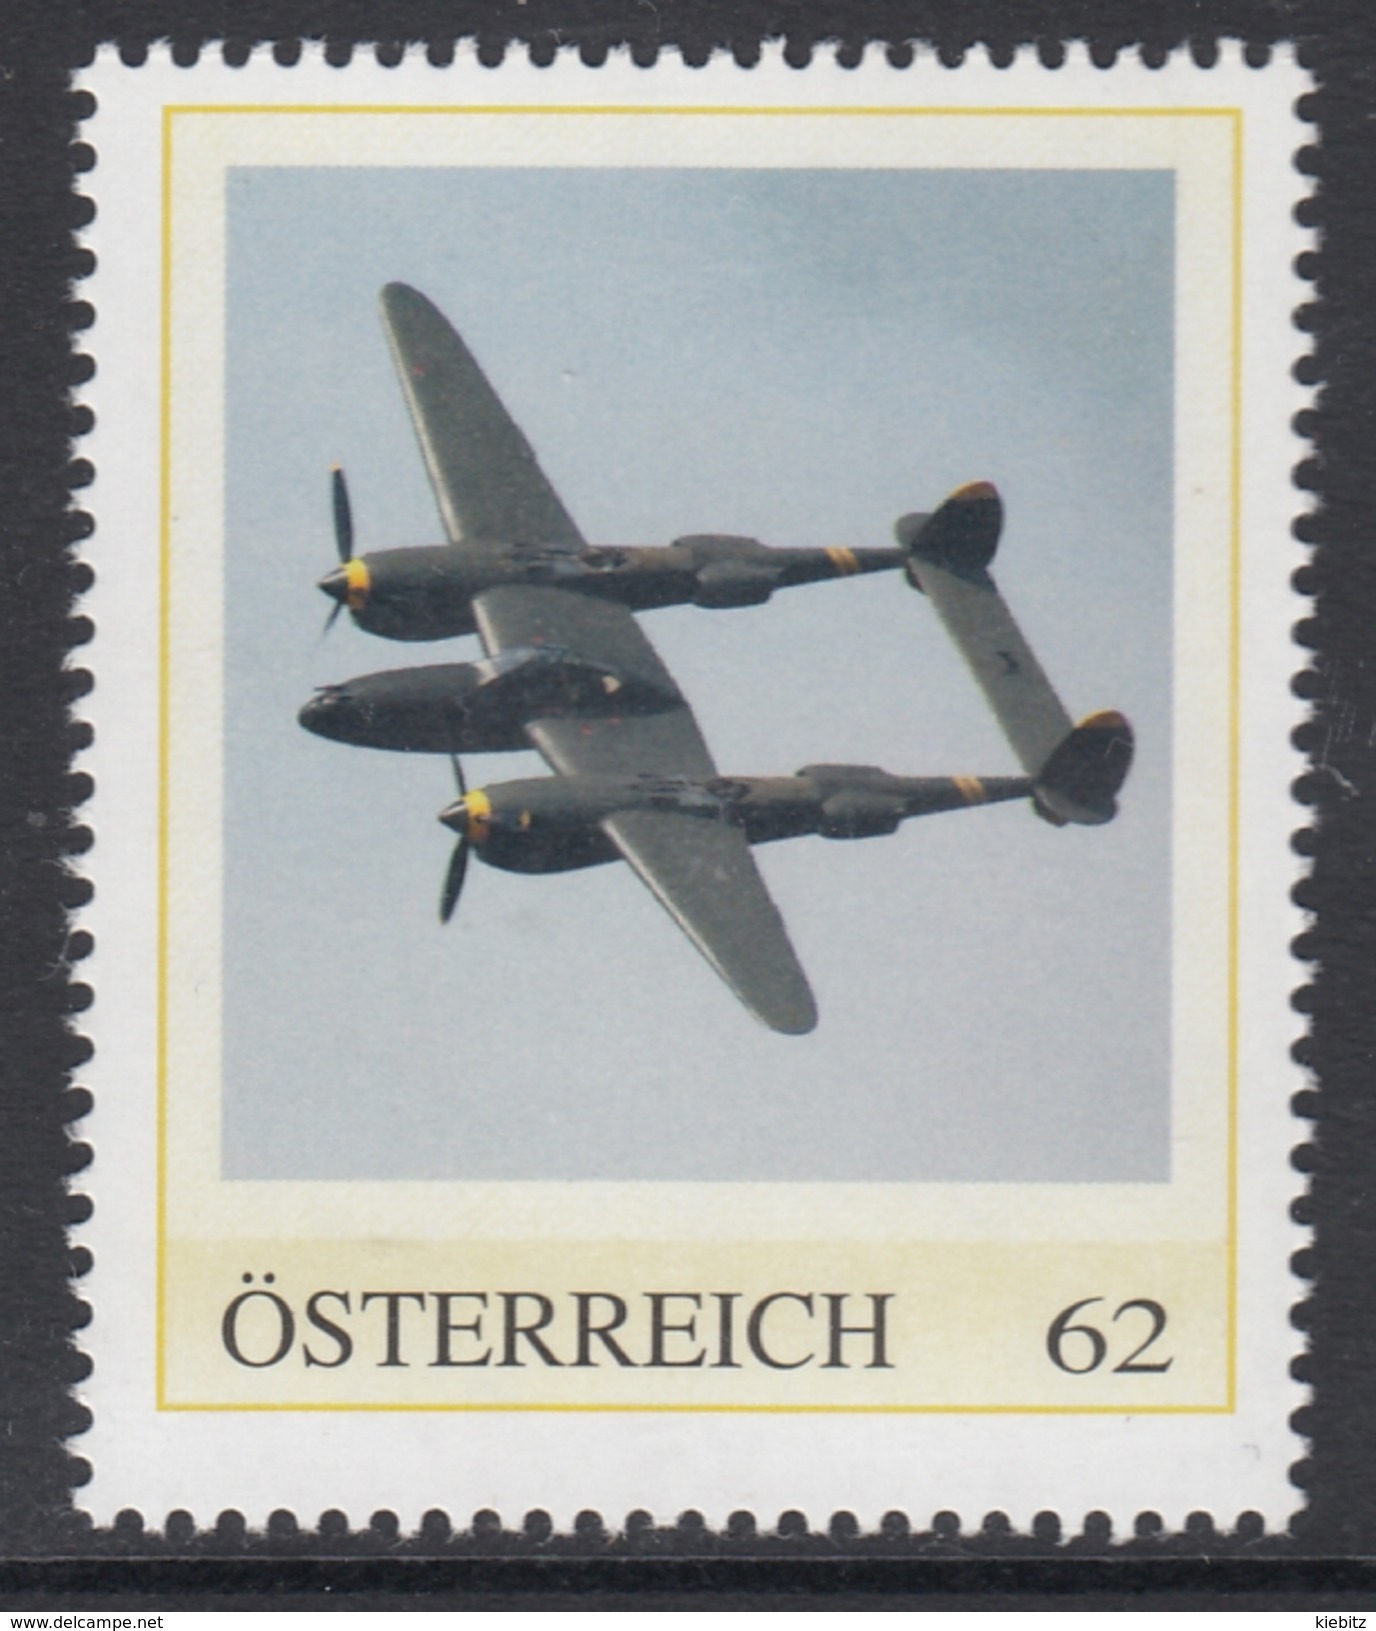 ÖSTERREICH 2016 ** 2.Weltkrieg - Lockheed P-38 Ligthning, Abfangjäger - PM Personalized Stamps MNH - 2. Weltkrieg